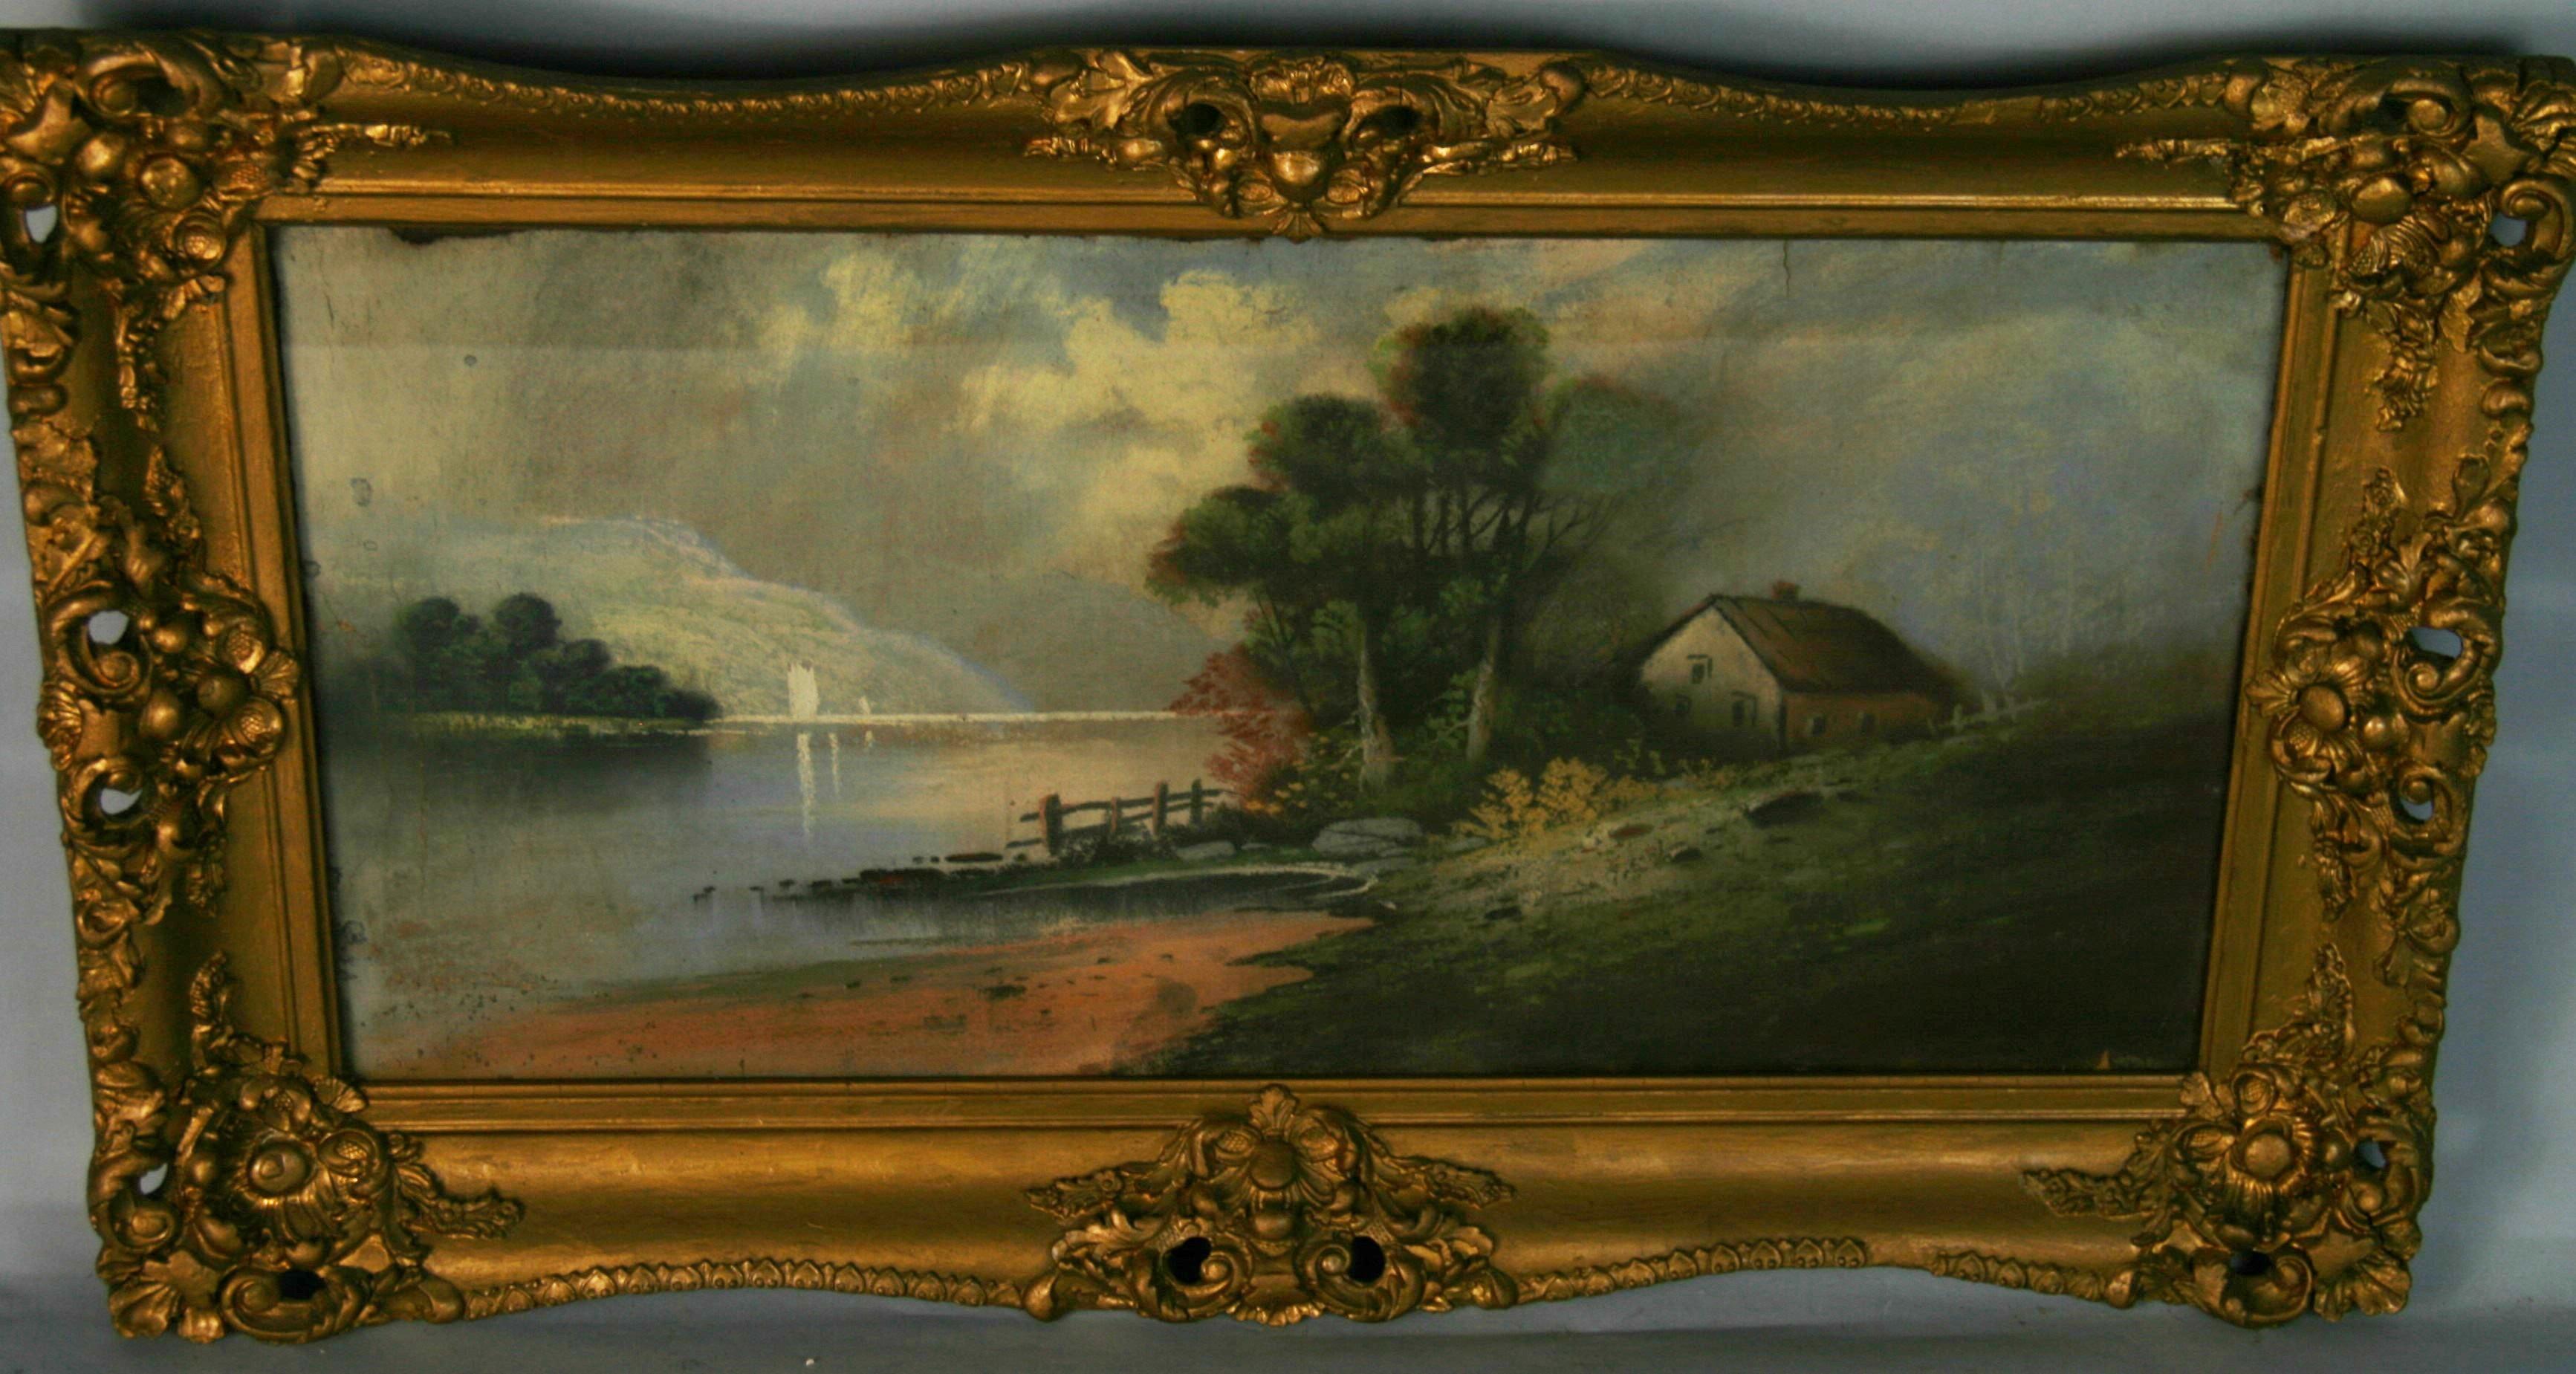 3997 Hudson River school landscape set in a period frame
Image size 12x23